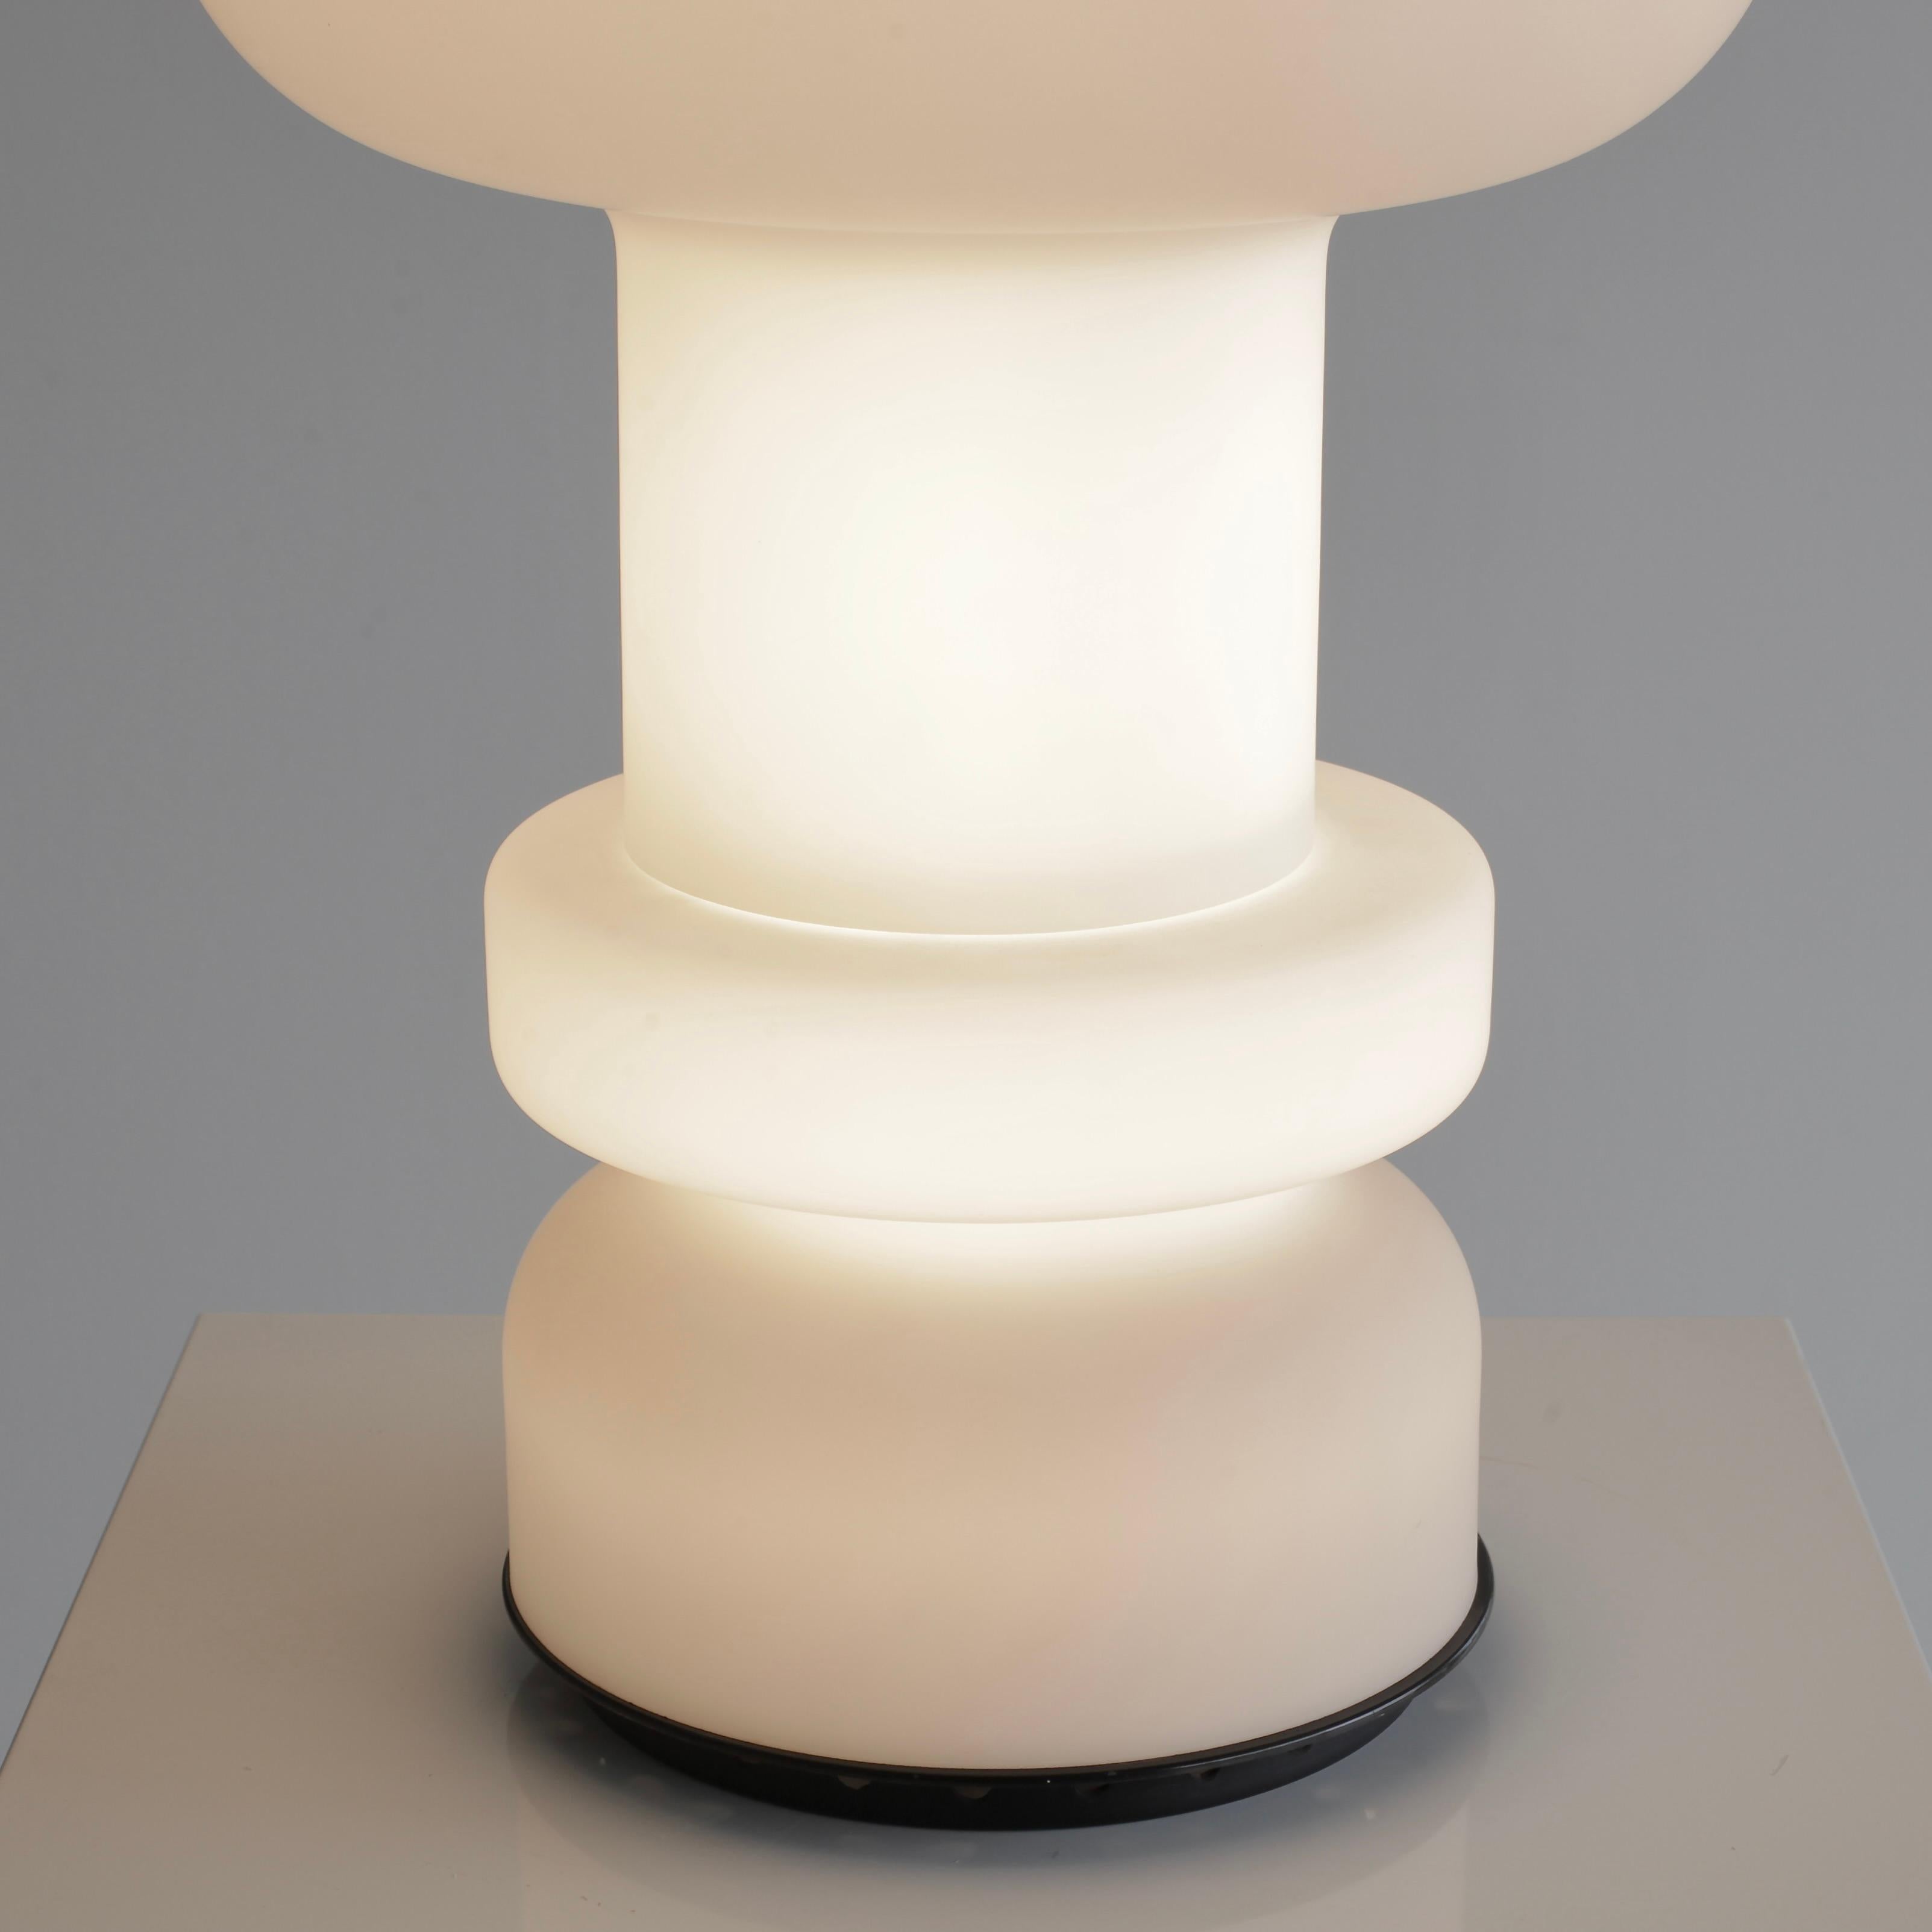 Large Original EARLY Lamp (2049 RE) by Bobo PICCOLI, FONTANA ARTE 1968 For Sale 2